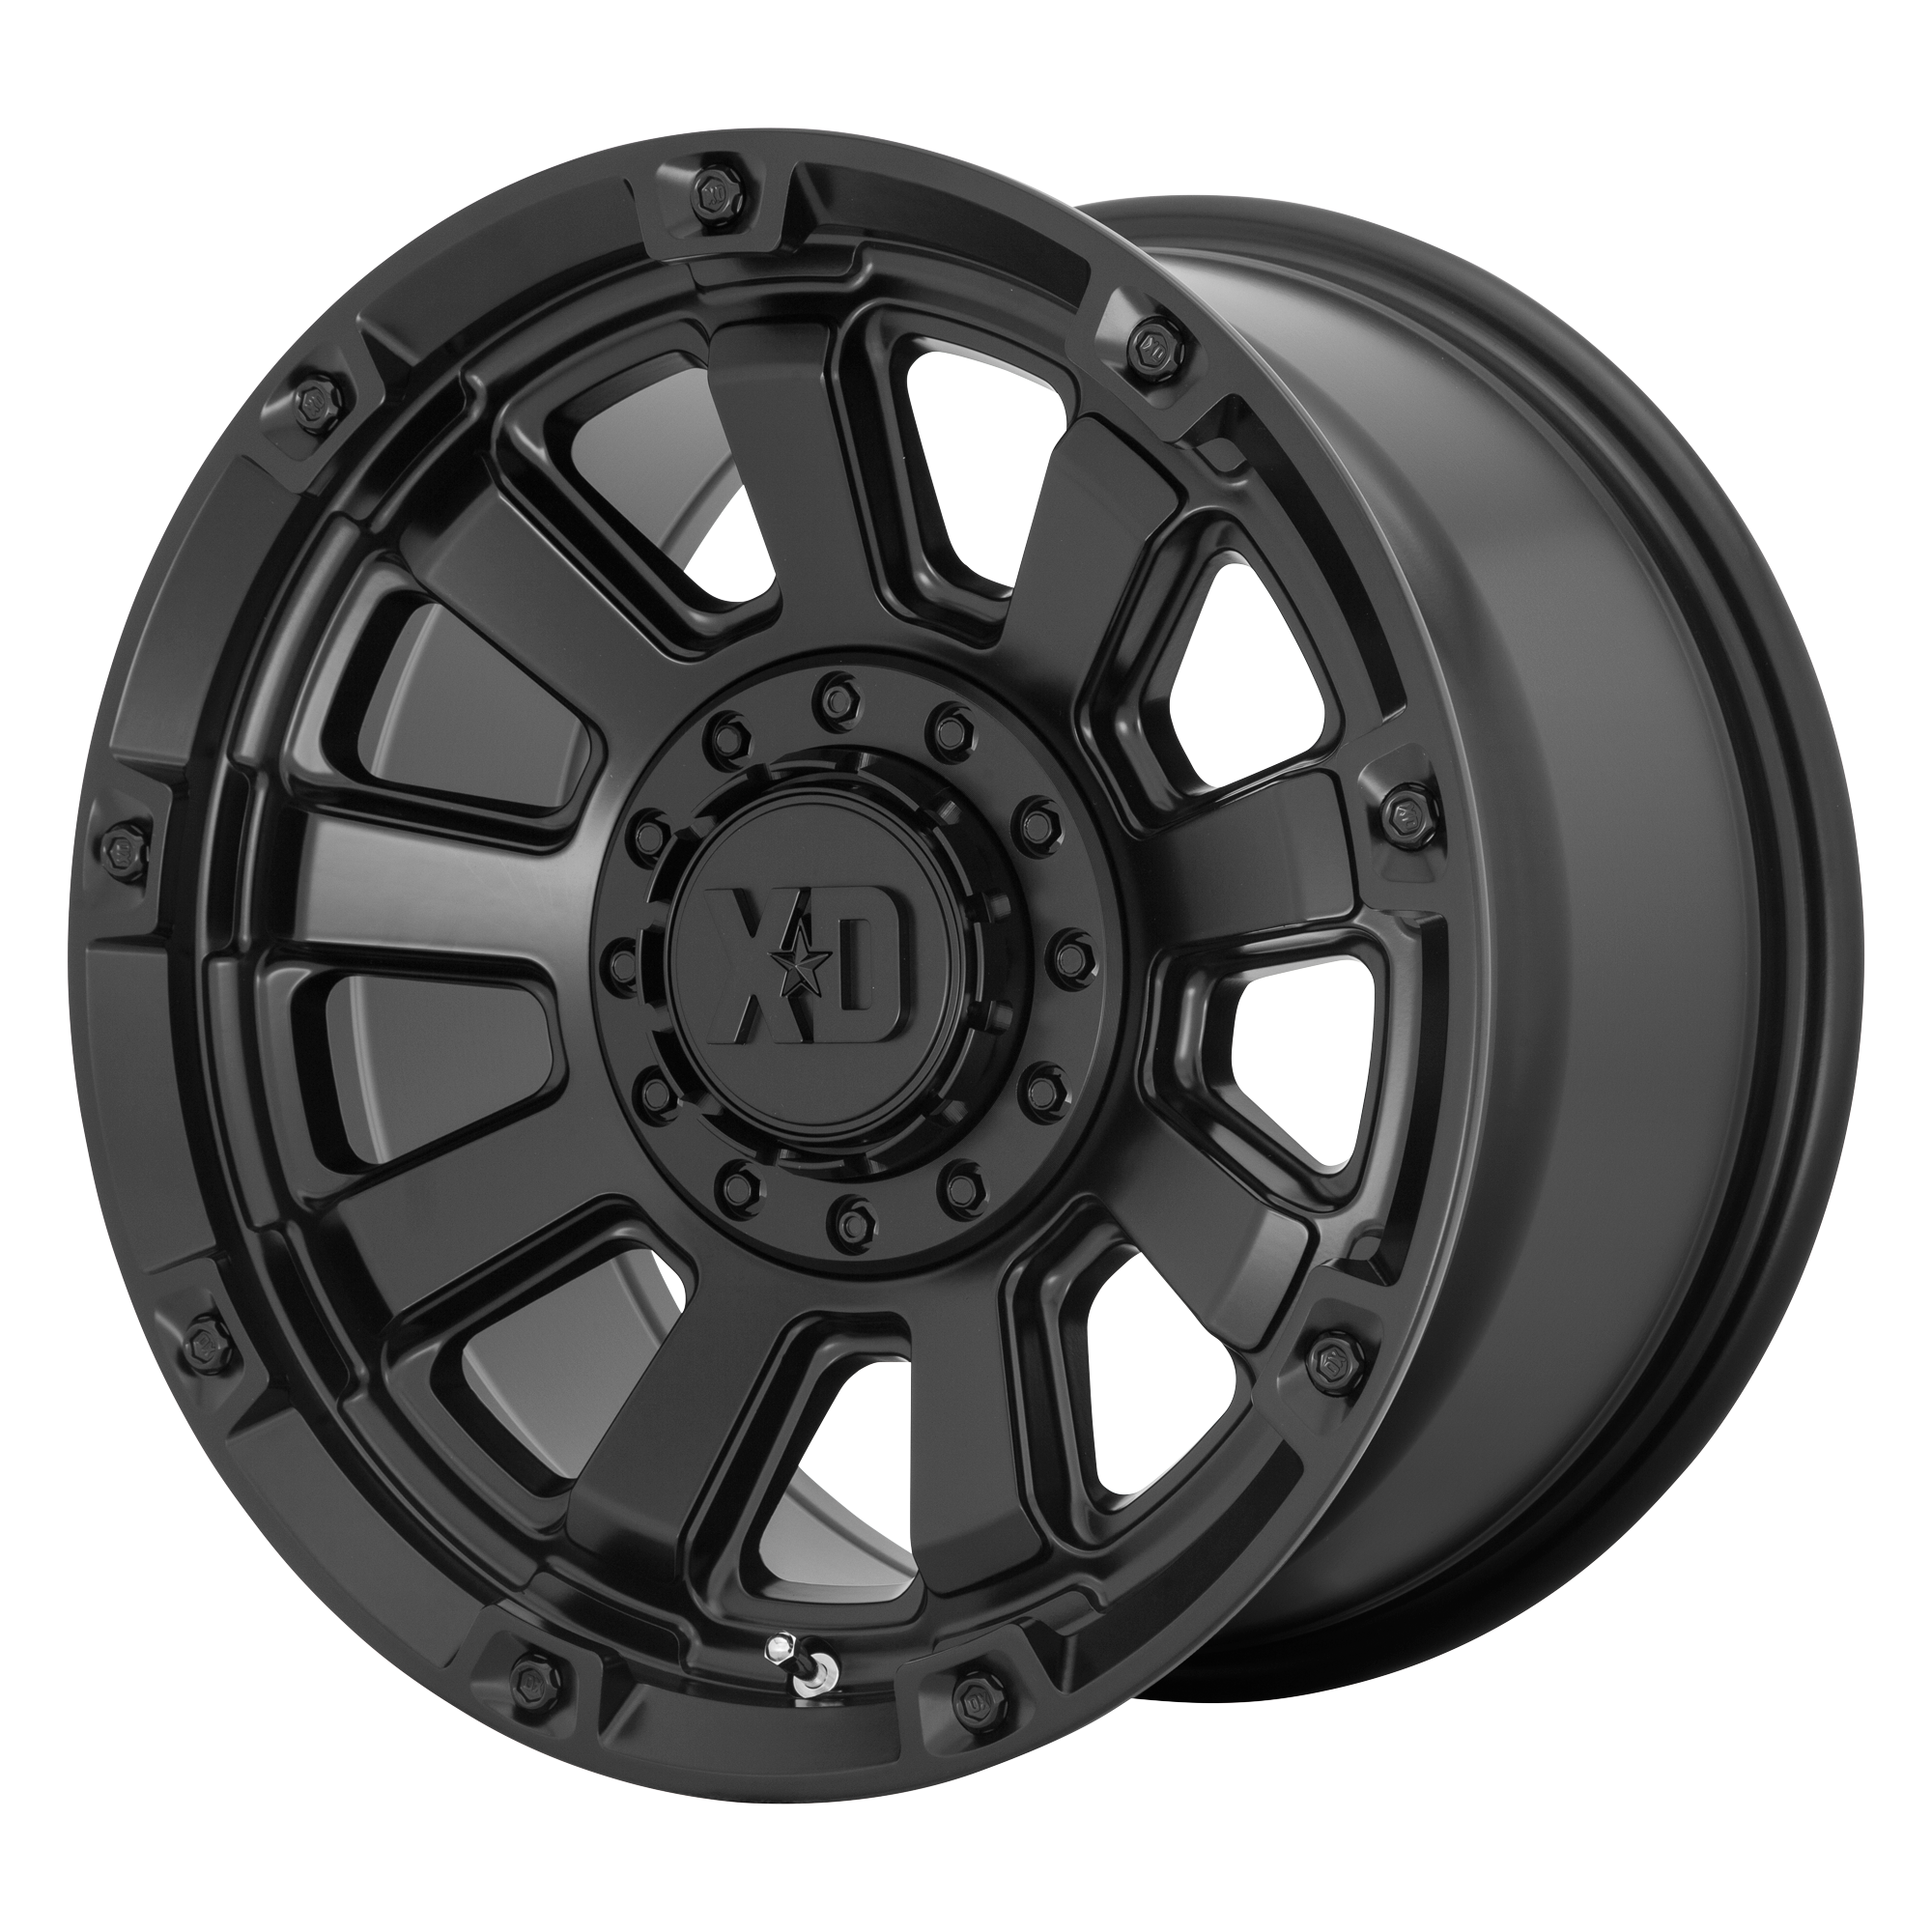 XD 20"x9" Non-Chrome Satin Black Custom Wheel ARSWCWXD85229086700